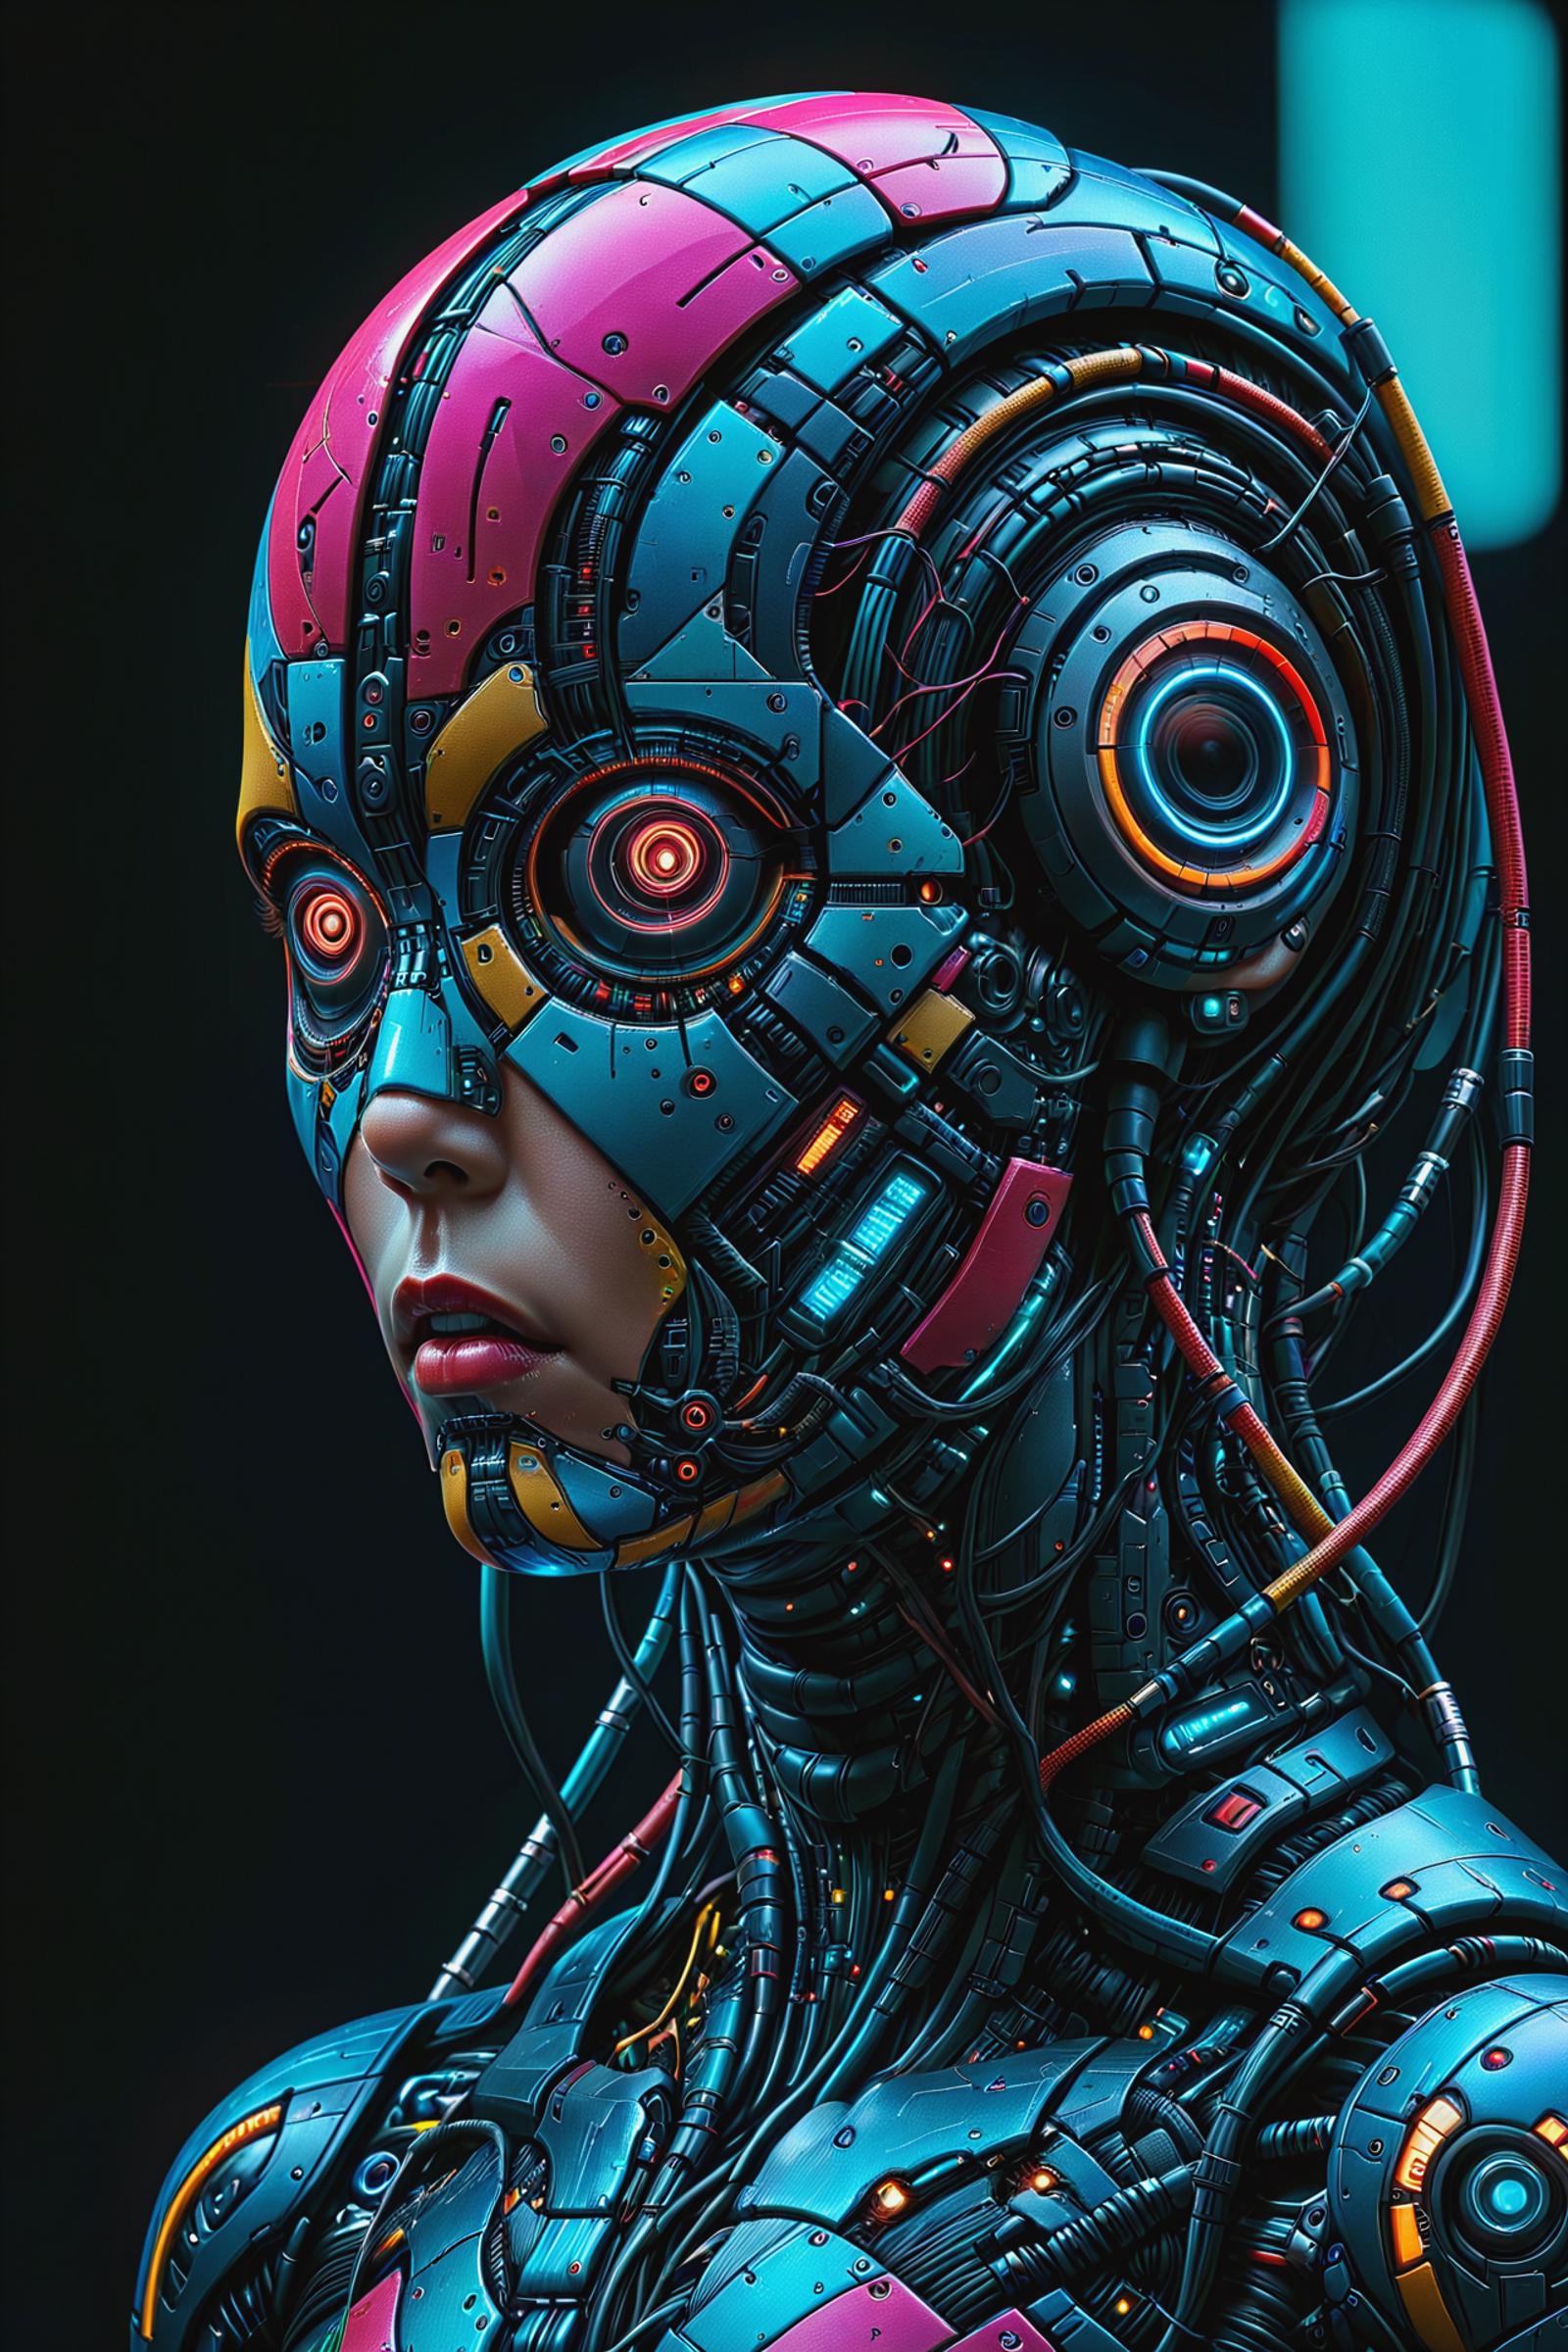 Faceless Cyborgs image by maDcaDDie